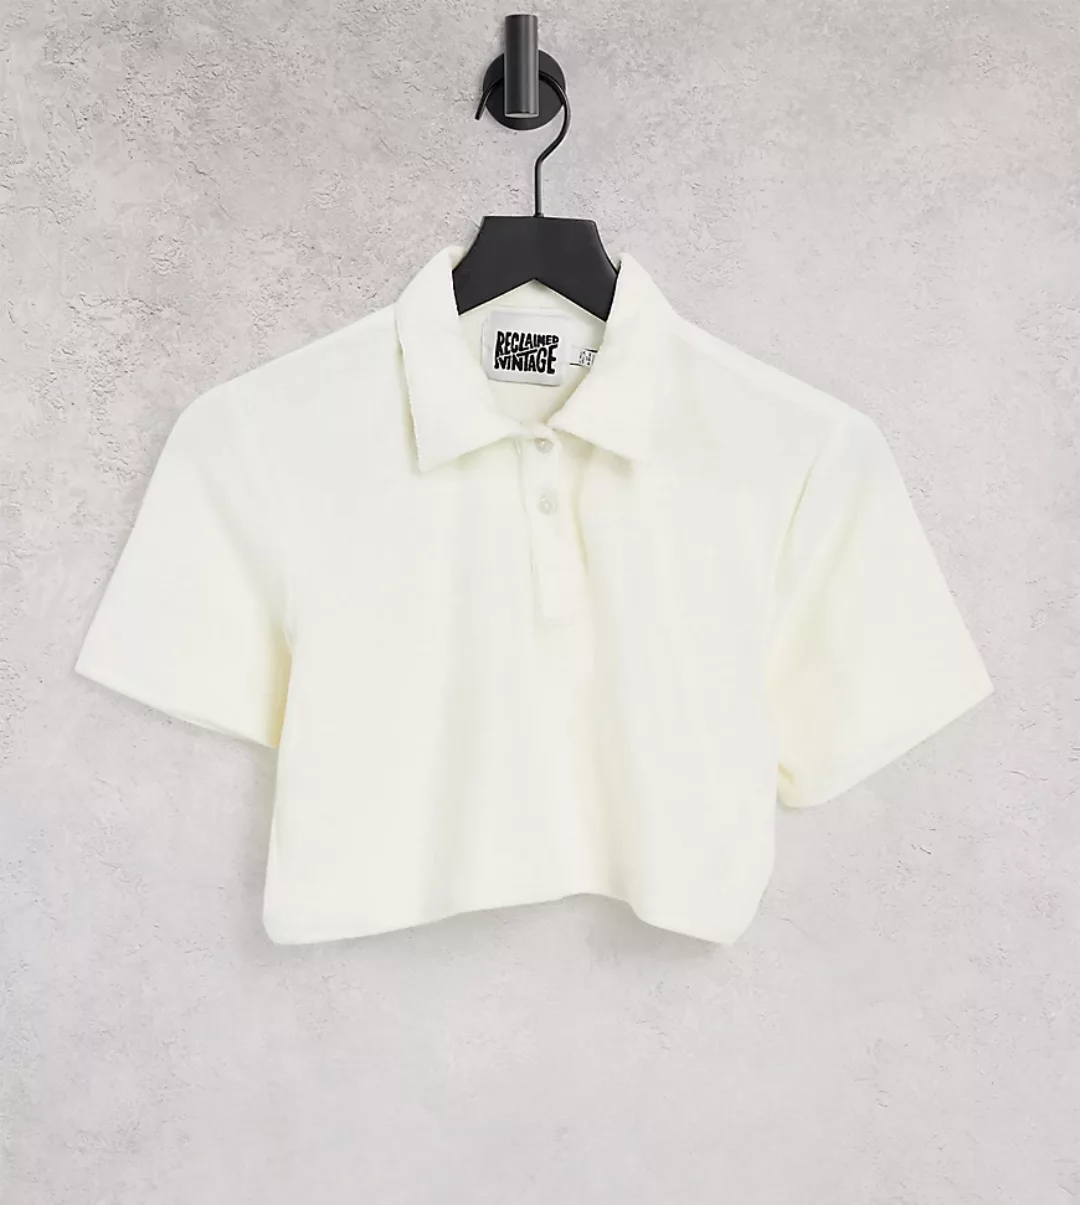 Reclaimed Vintage Inspired – Frottee-Hemd mit Reverskragen in Ecru, Kombite günstig online kaufen